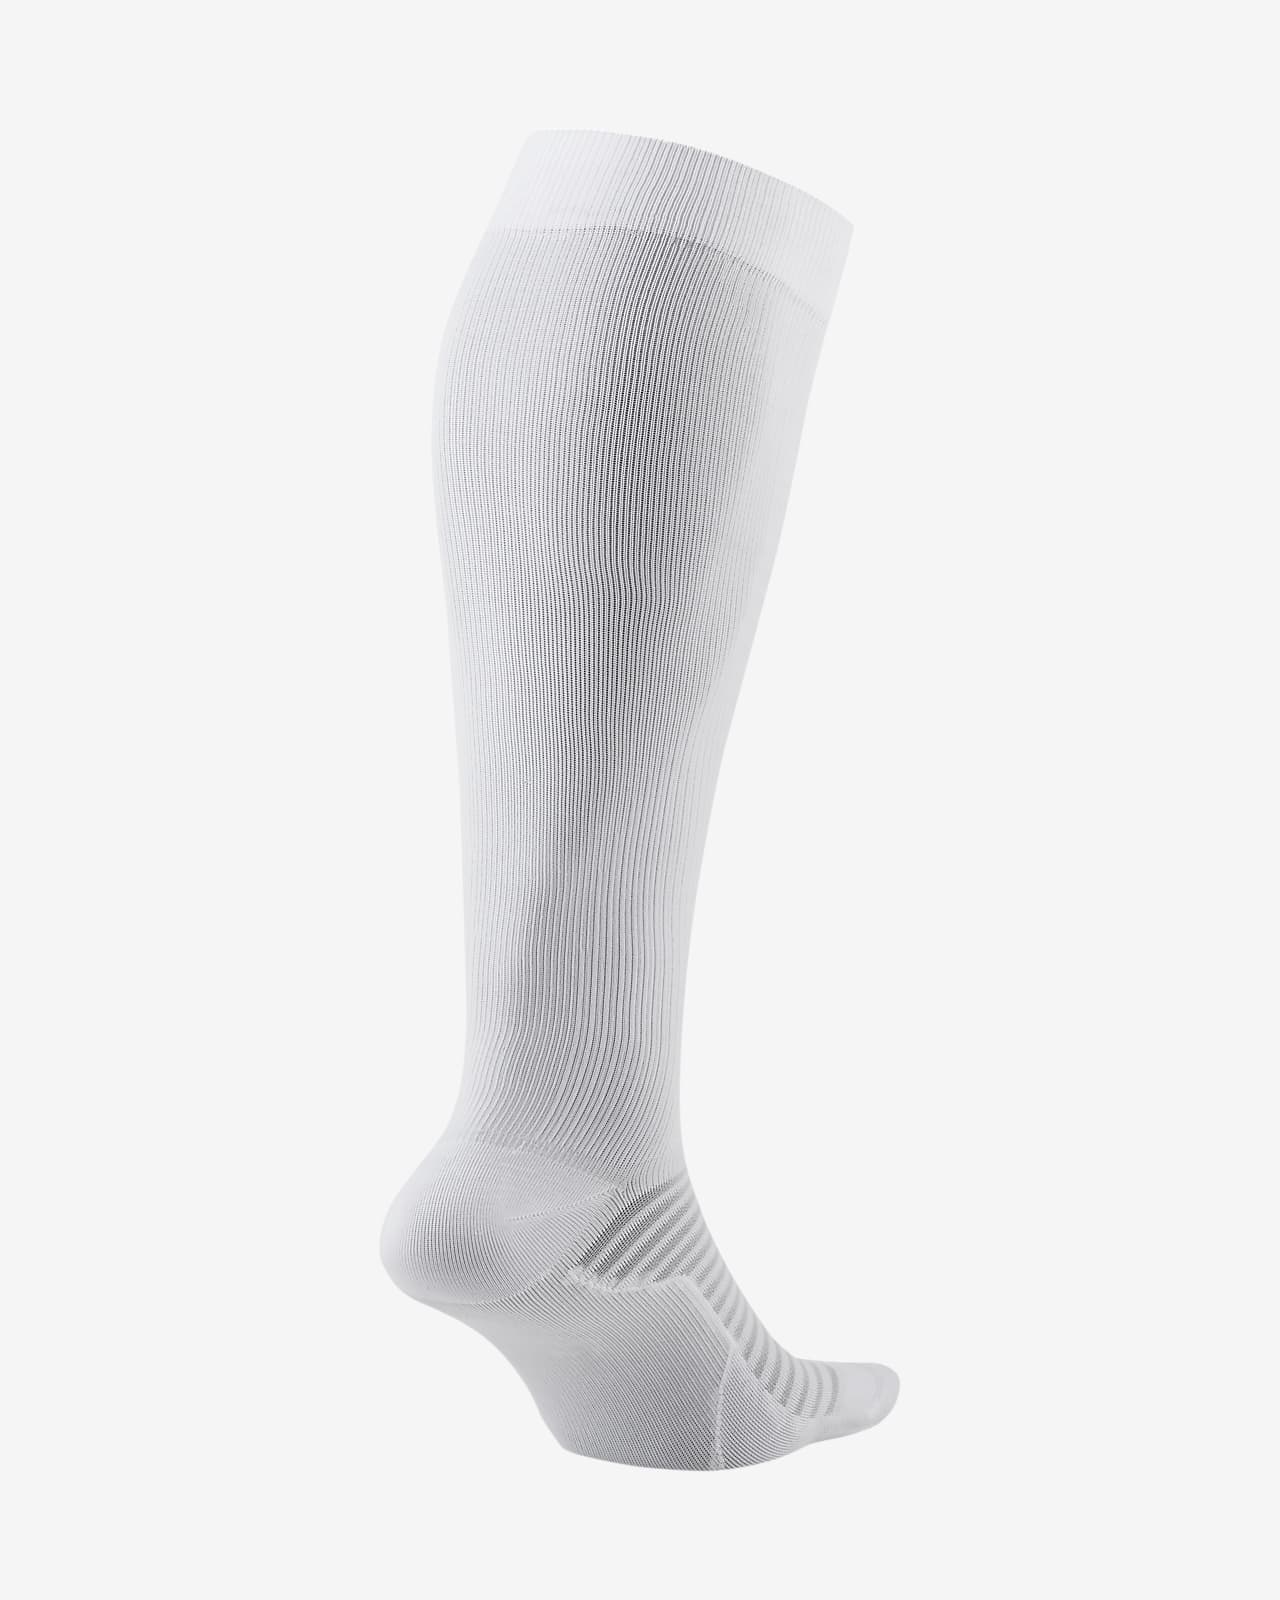 nike compression socks running